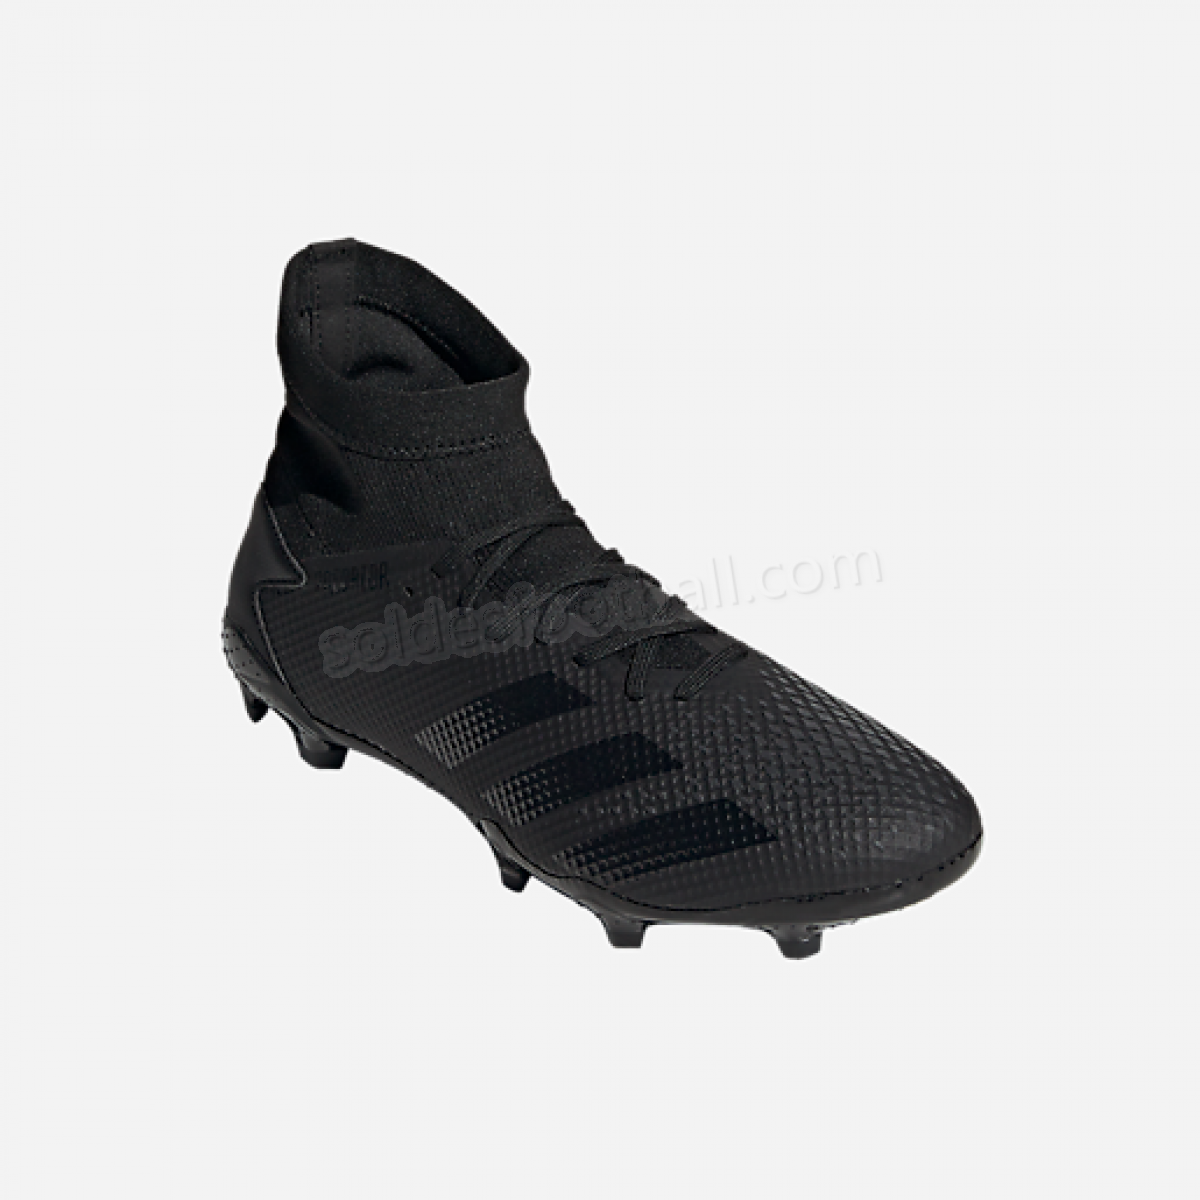 Chaussures de football moulées homme Predator 20.3 Fg-ADIDAS en solde - Chaussures de football moulées homme Predator 20.3 Fg-ADIDAS en solde